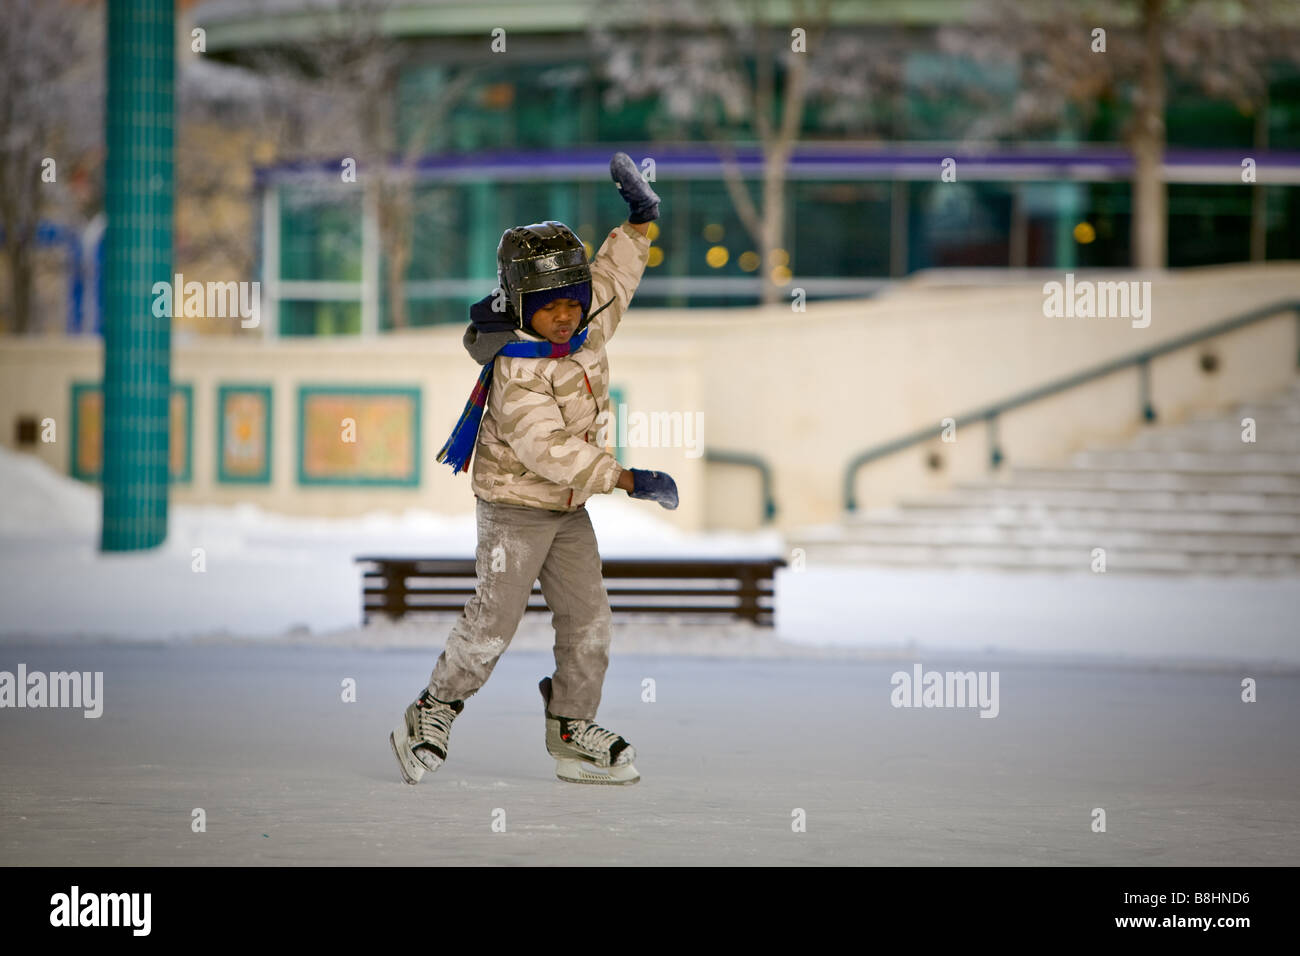 Young African American Boy, Schlittschuh, Outdoor-Eisbahn zu lernen. Stockfoto